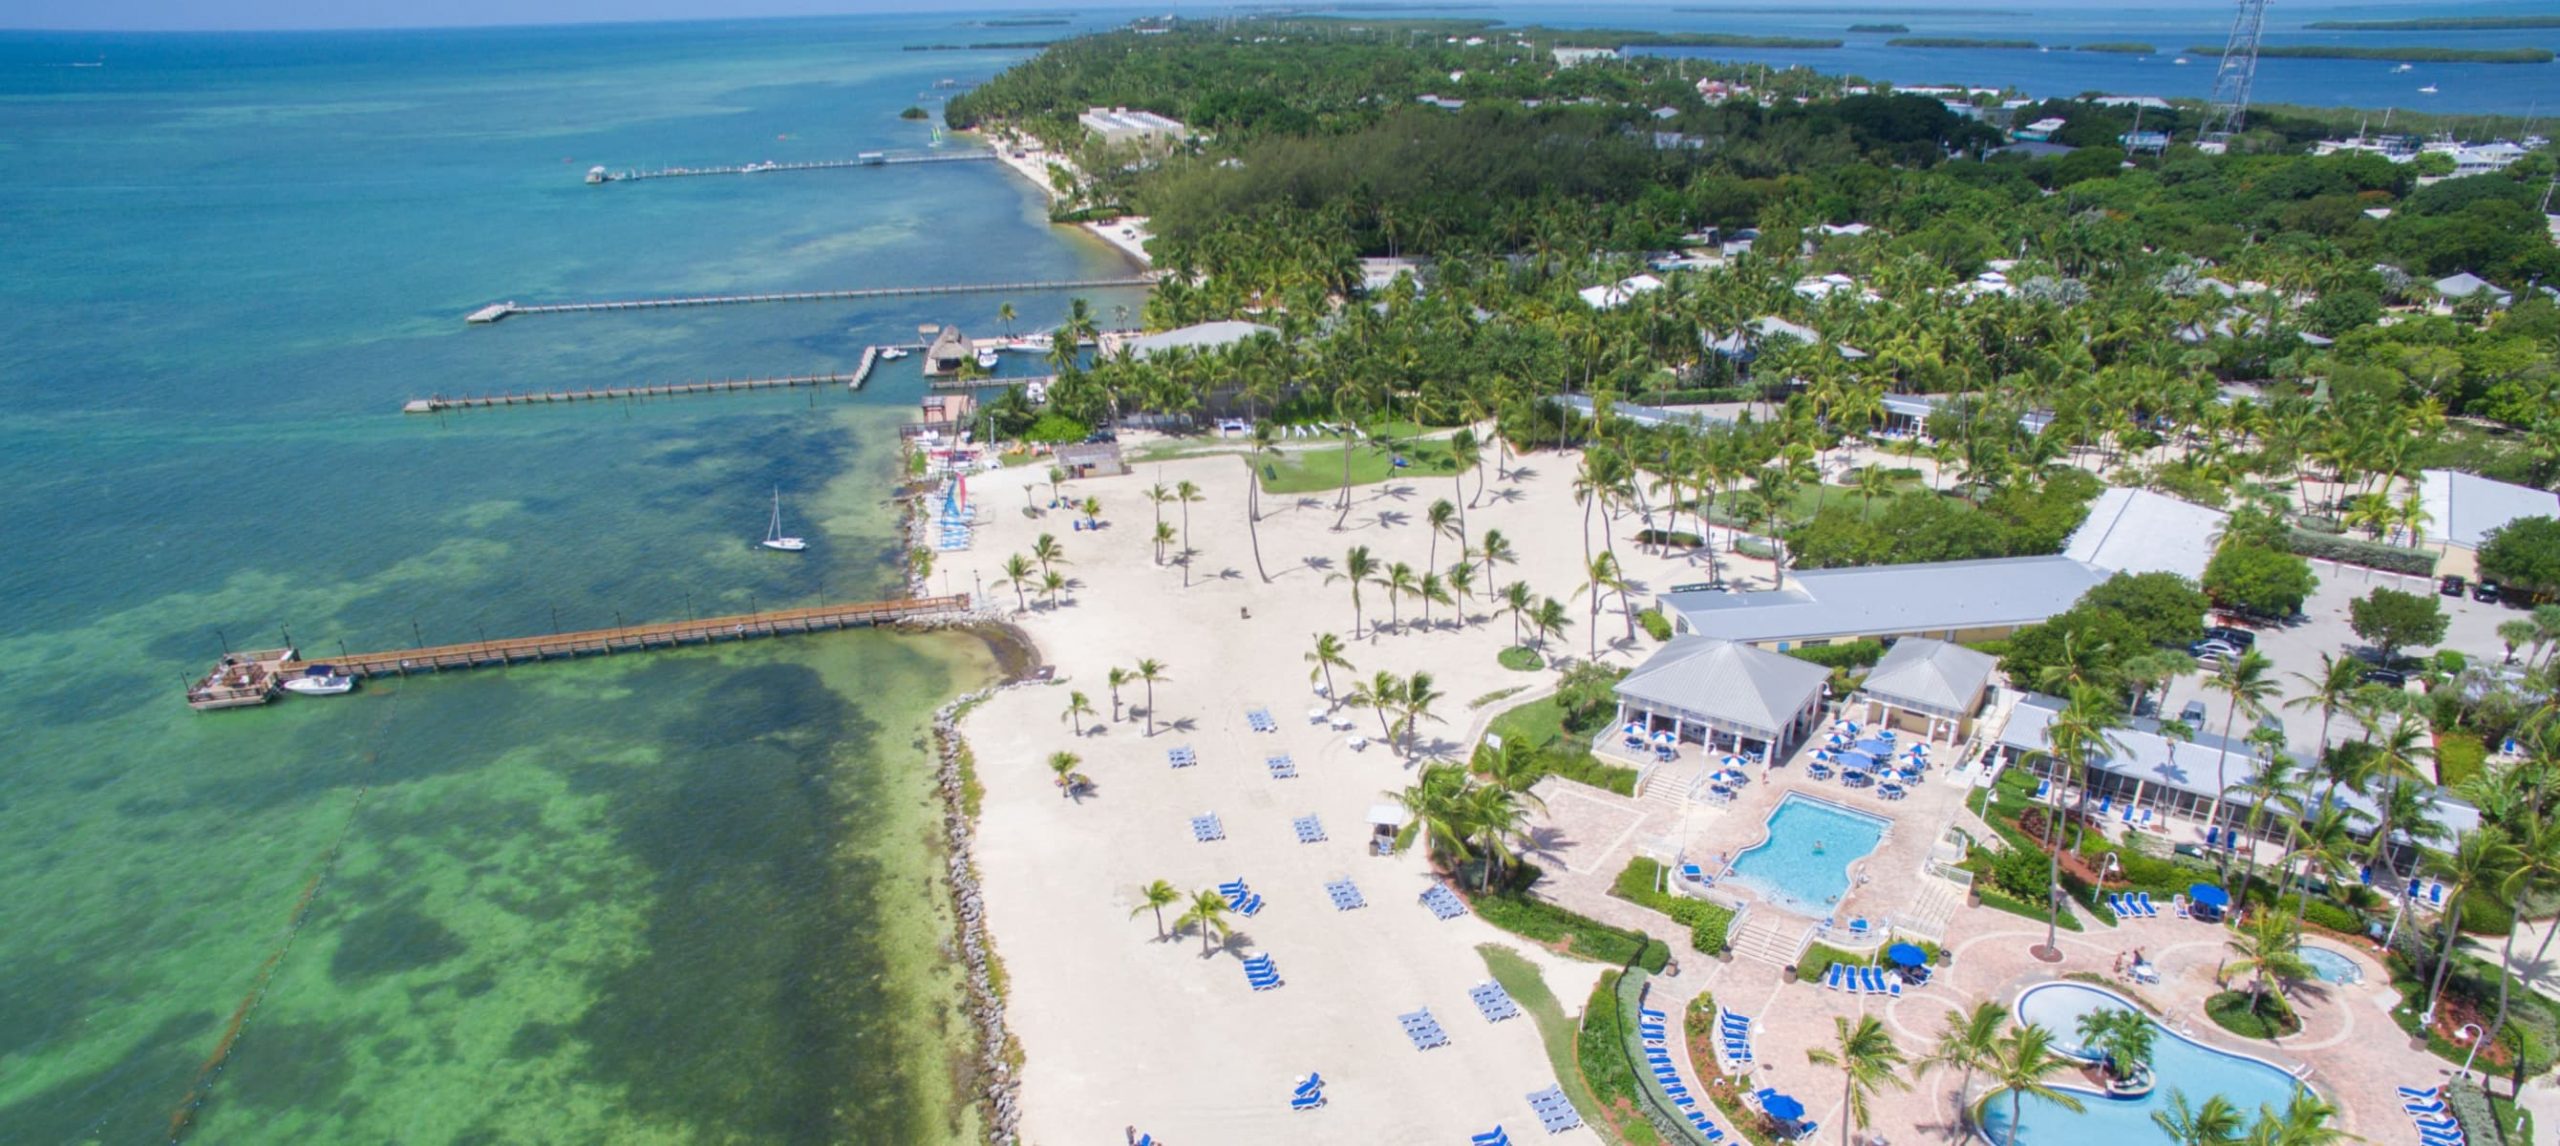 Aerial view of resort in Florida.